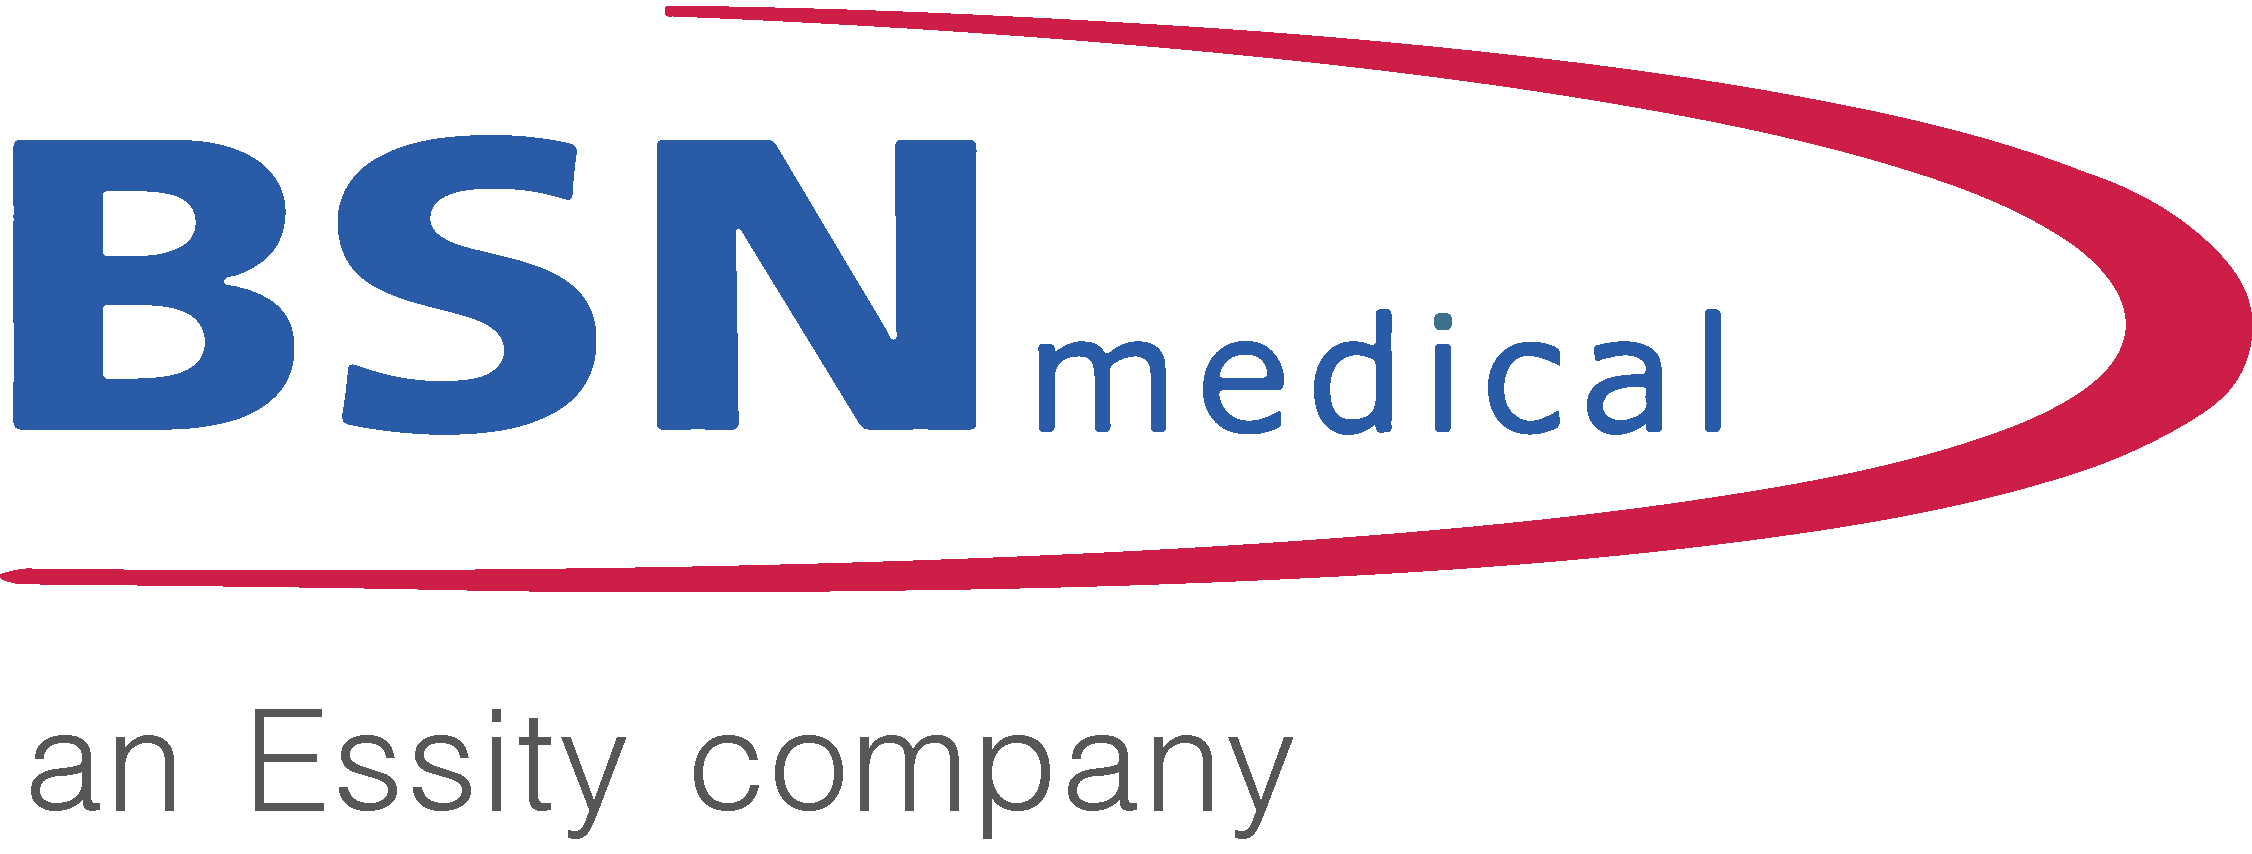 BSN medical an essity company